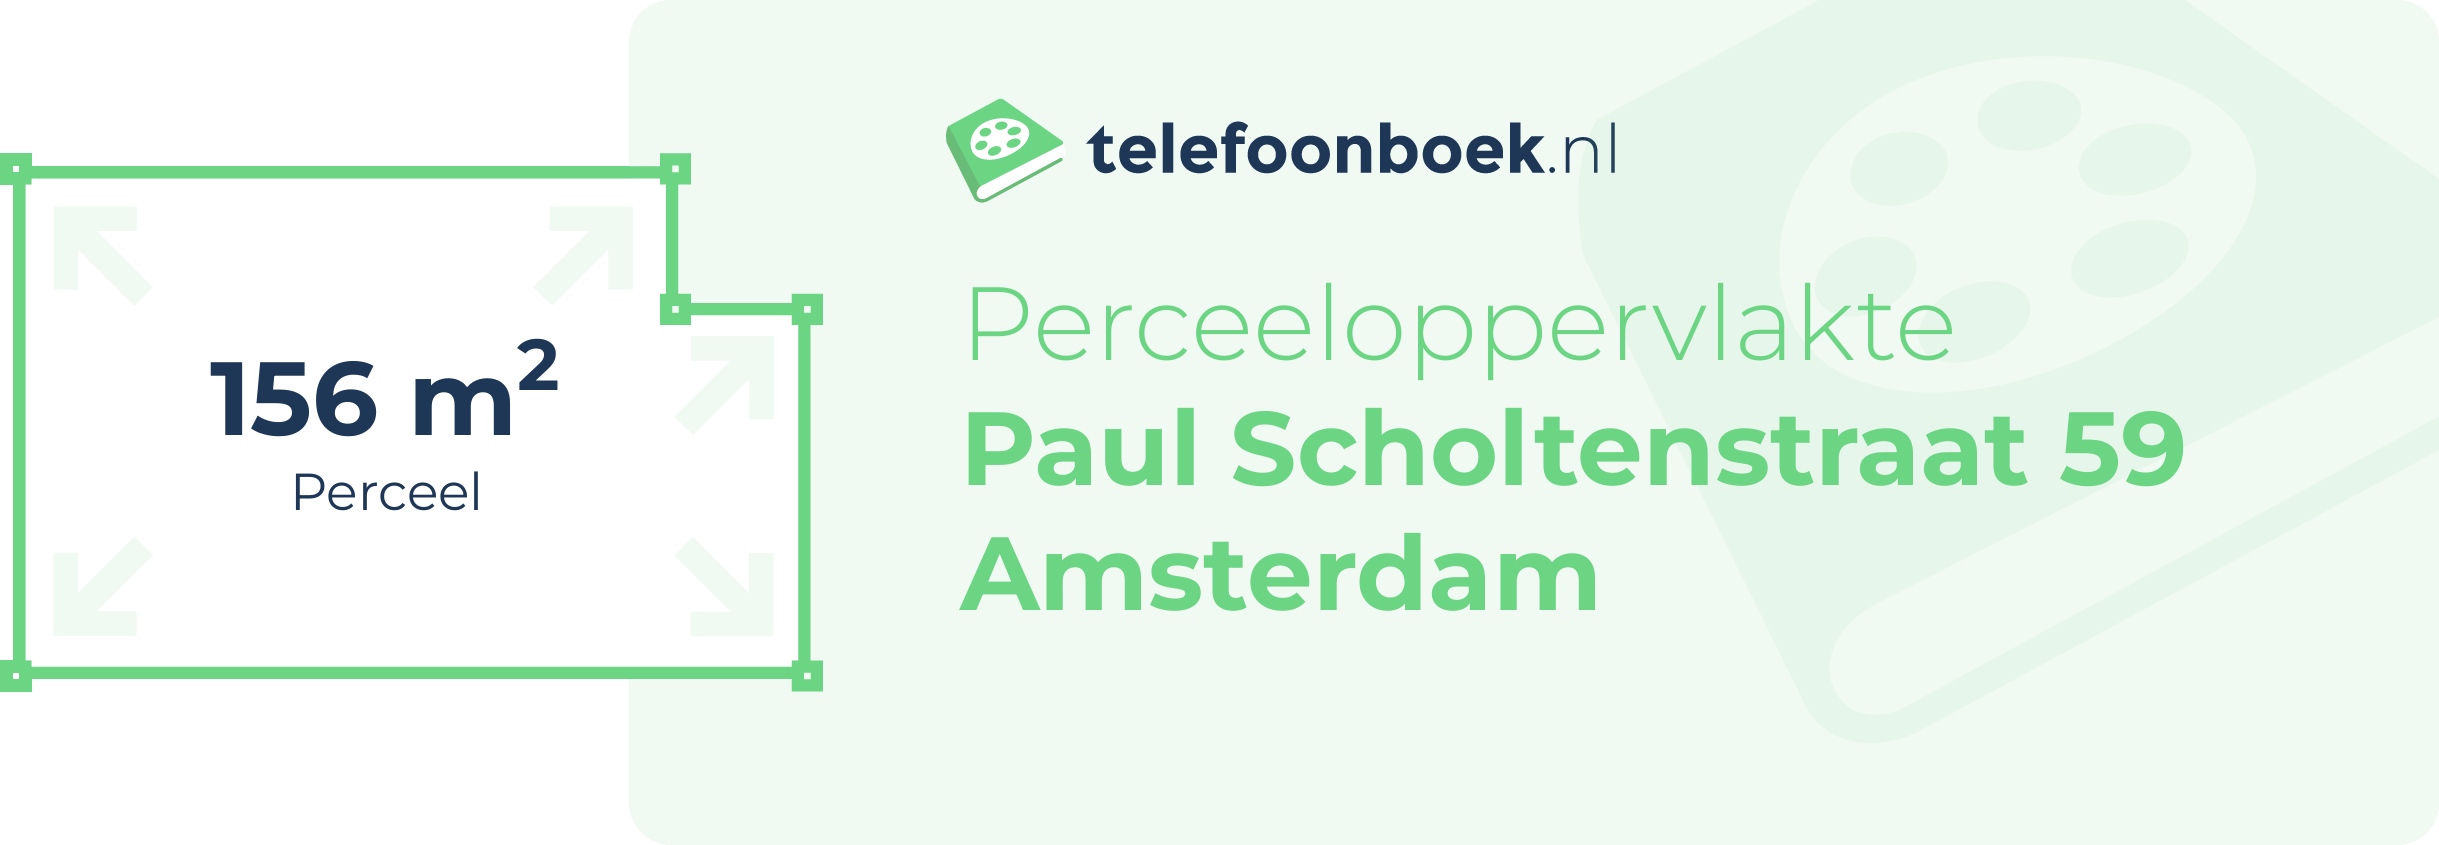 Perceeloppervlakte Paul Scholtenstraat 59 Amsterdam